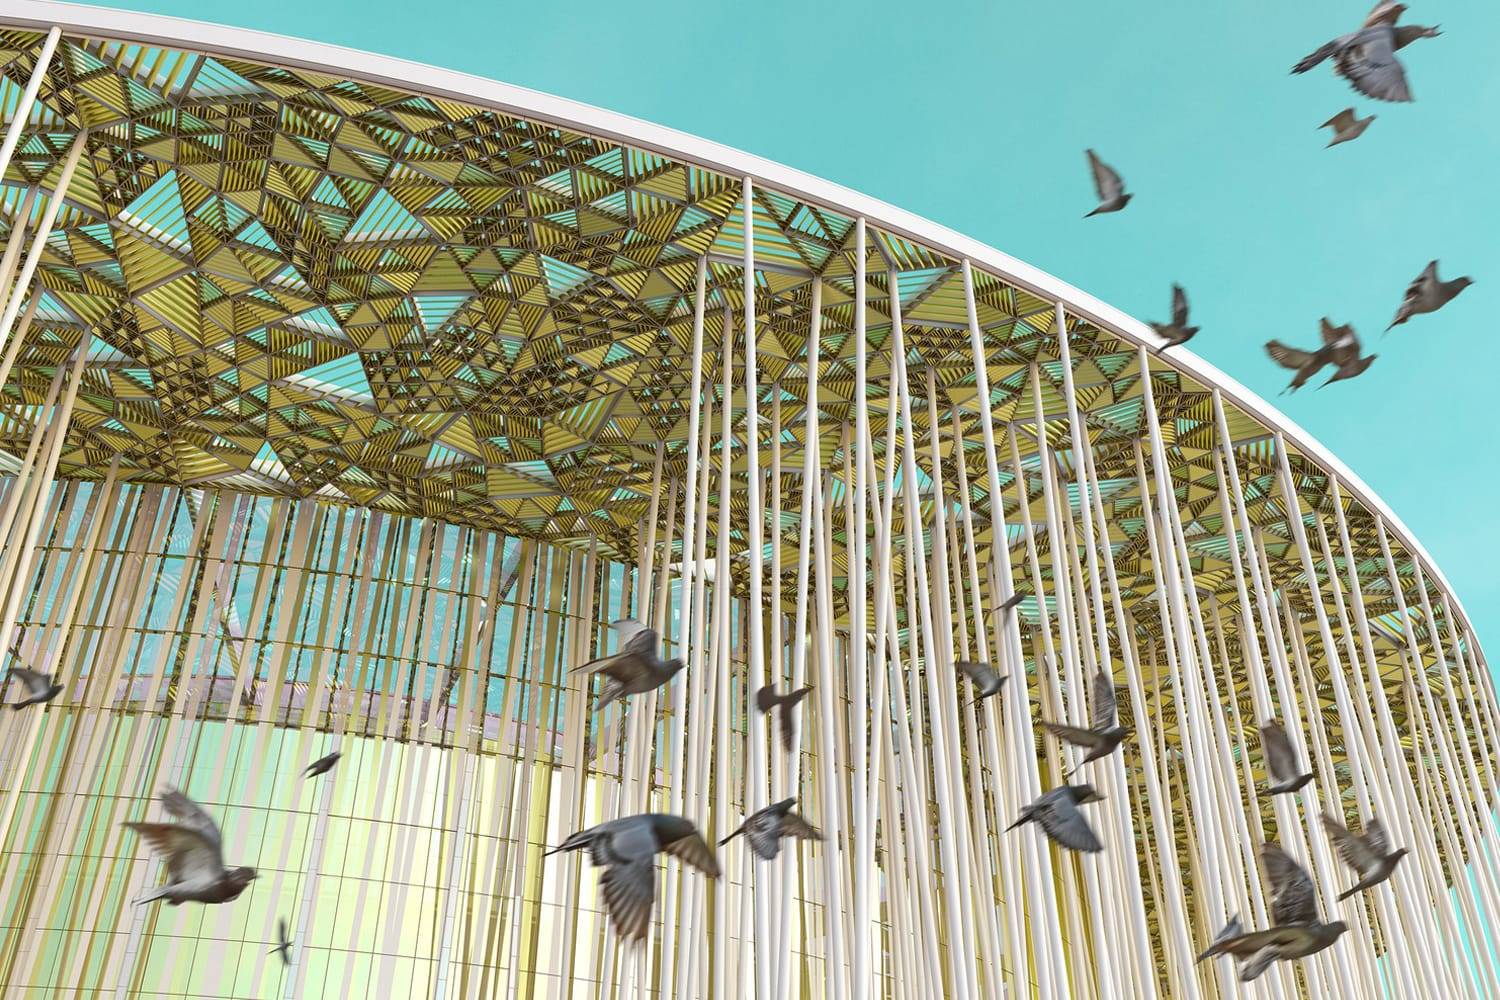 Wuxi Thaiu Show Theatre, de Steven Chilton Architects, es espectacular a simple vista.